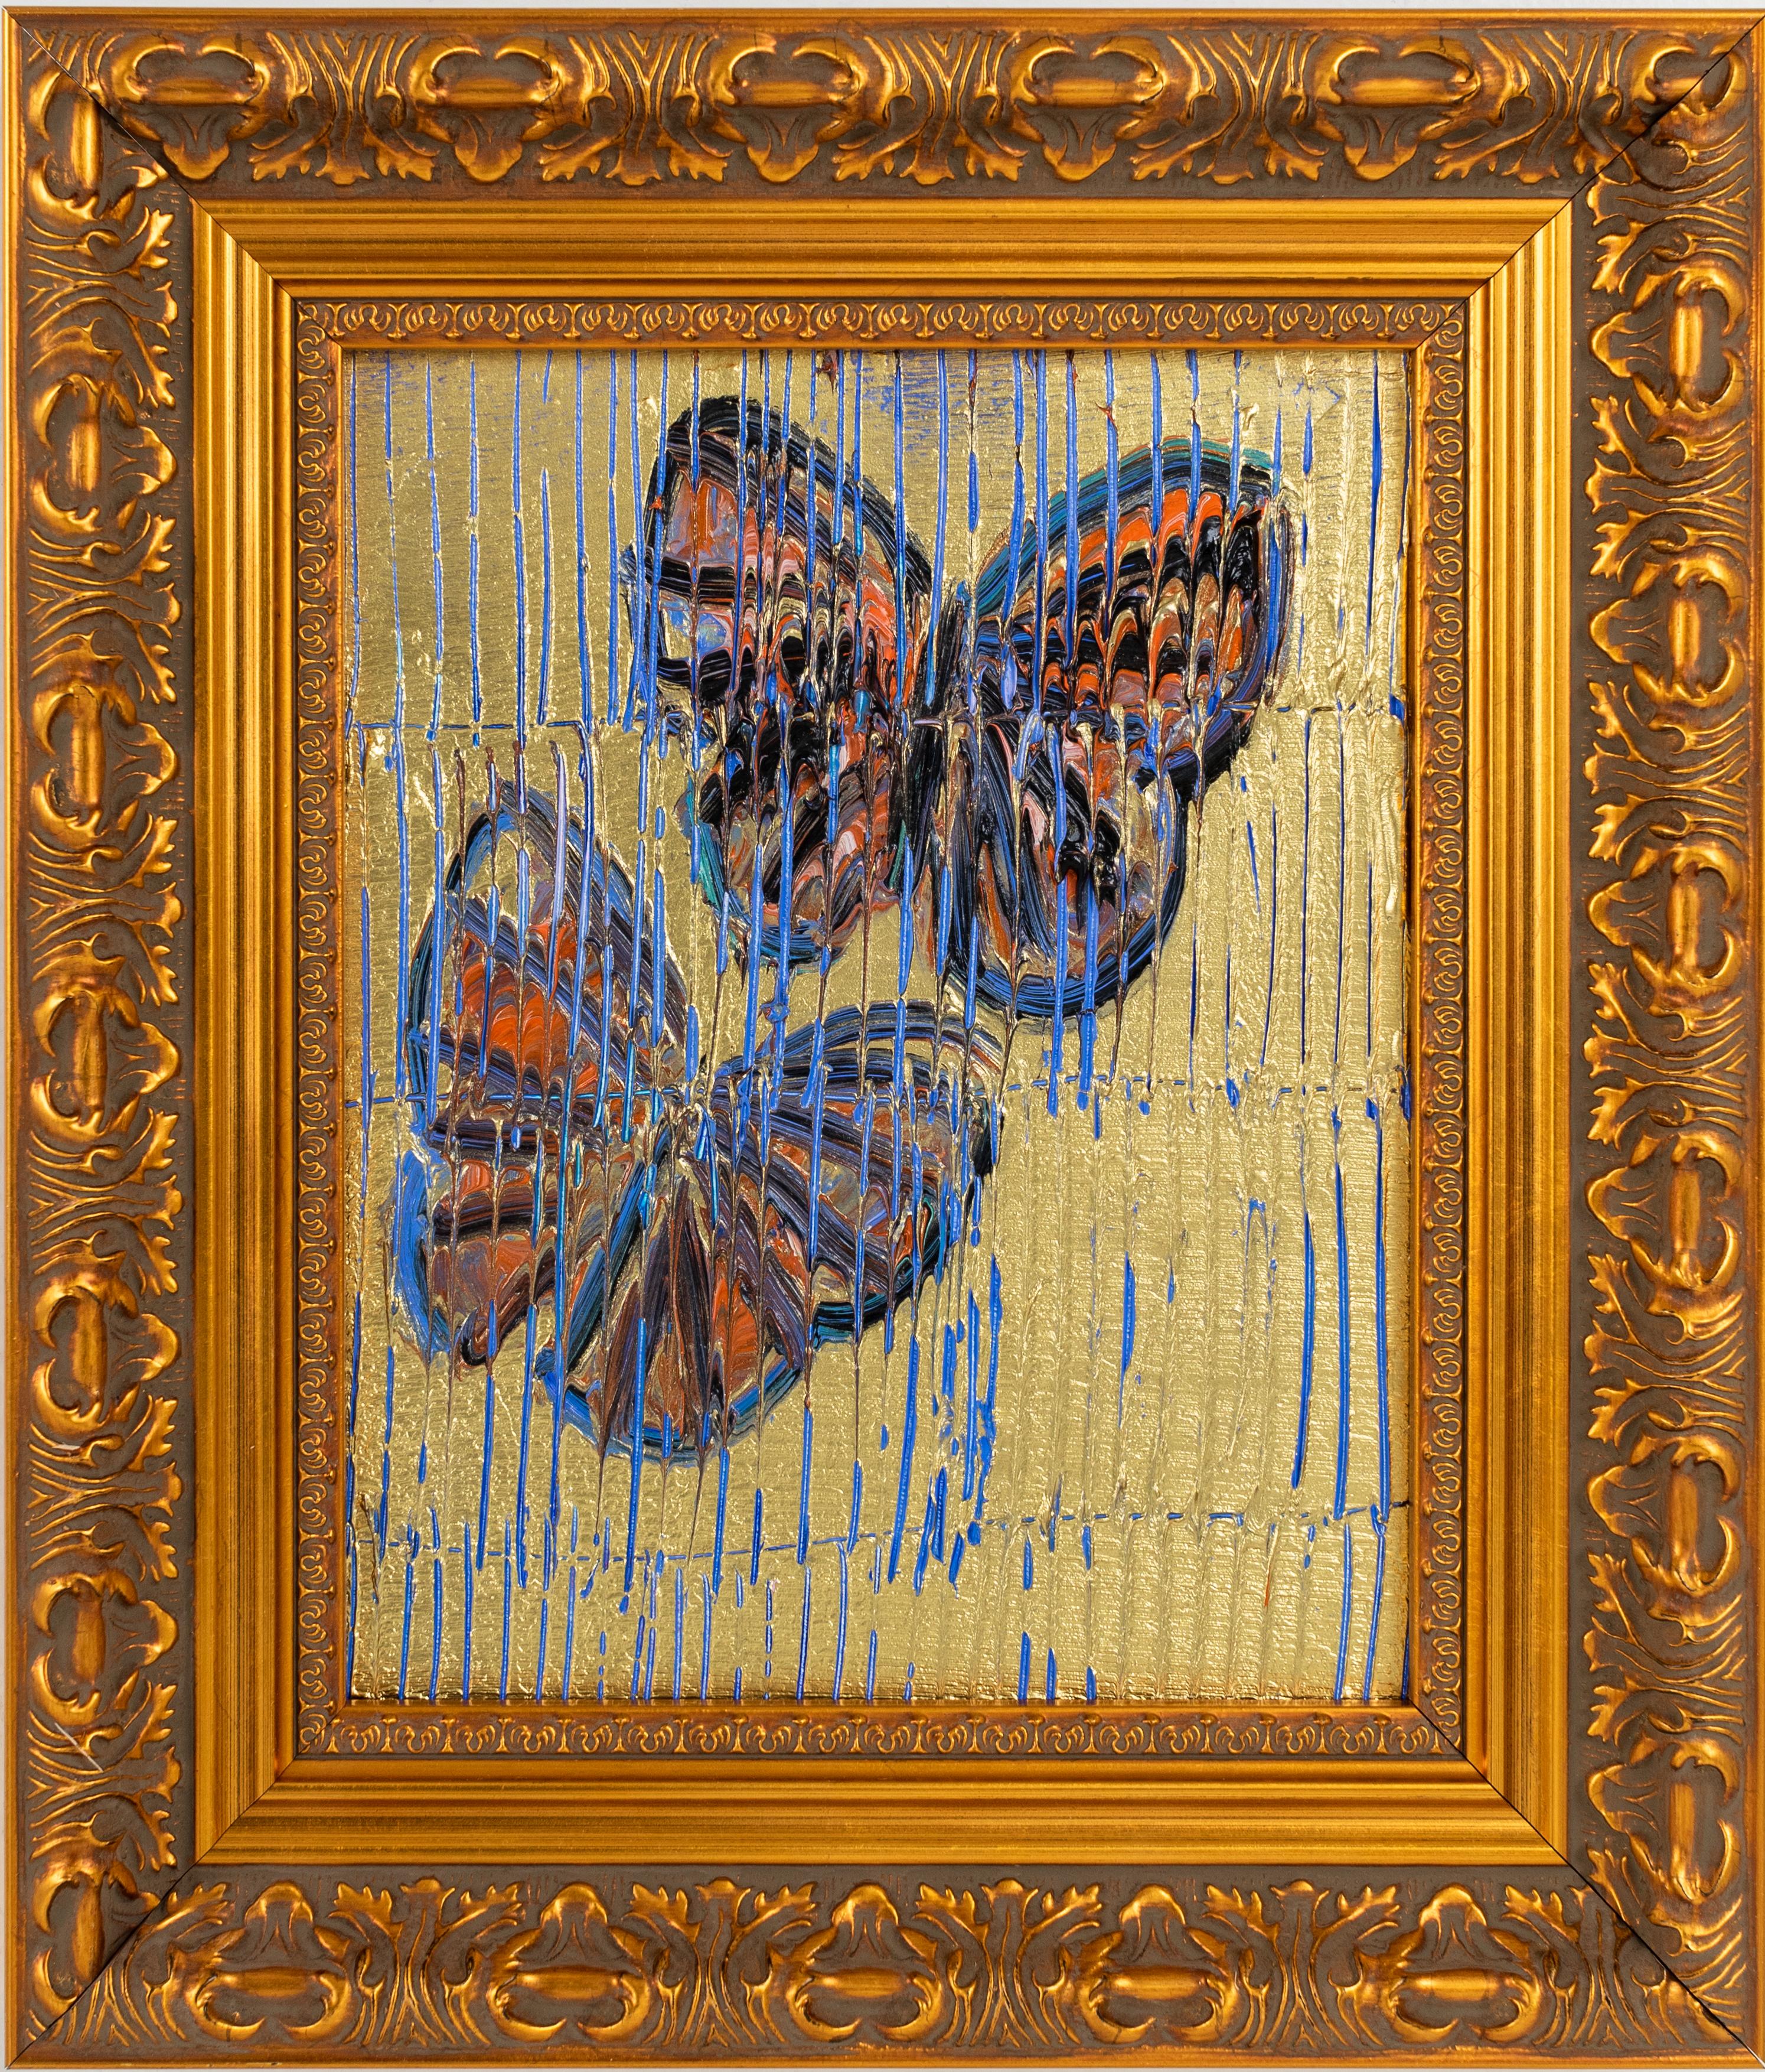 Hunt Slonem "Piermont Monarchs" Butterflies 
Orange Monarch Butterflies on a deep blue scored gold background in an antique frame

Unframed: 10 x 8 inches  
Framed: 14.5 x 12.5 inches
*Painting is framed - Please note that not all Hunt Slonem frames